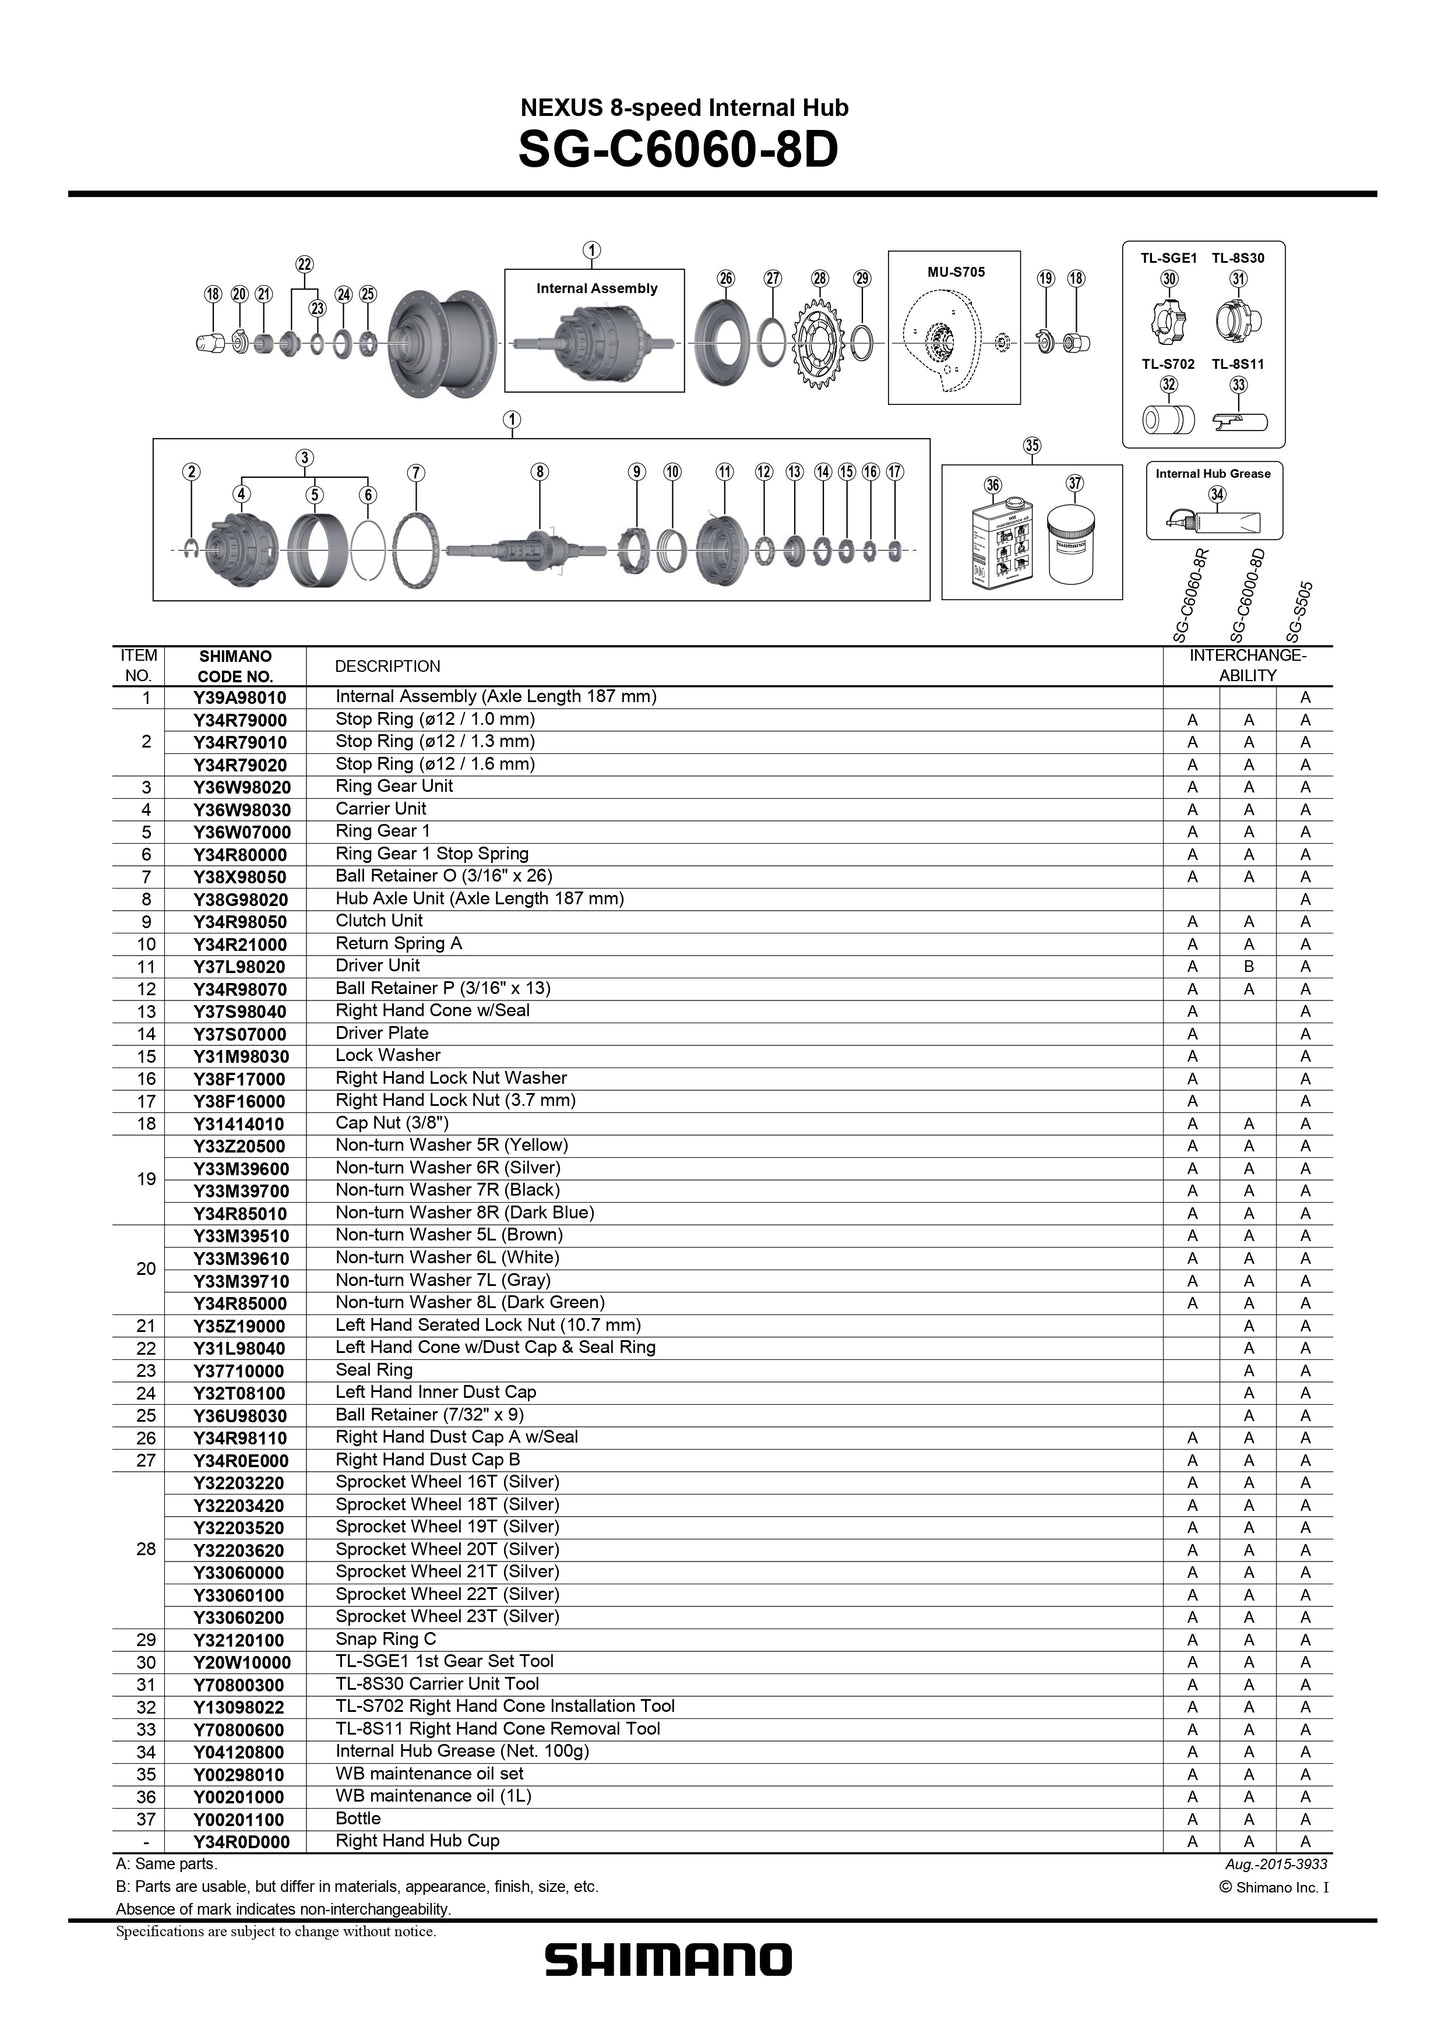 SHIMANO Nexus SG-C6060-8D Internal Hub 8-Speed Internal Assembly Axle Length 187 mm - Y39A98010-Pit Crew Cycles